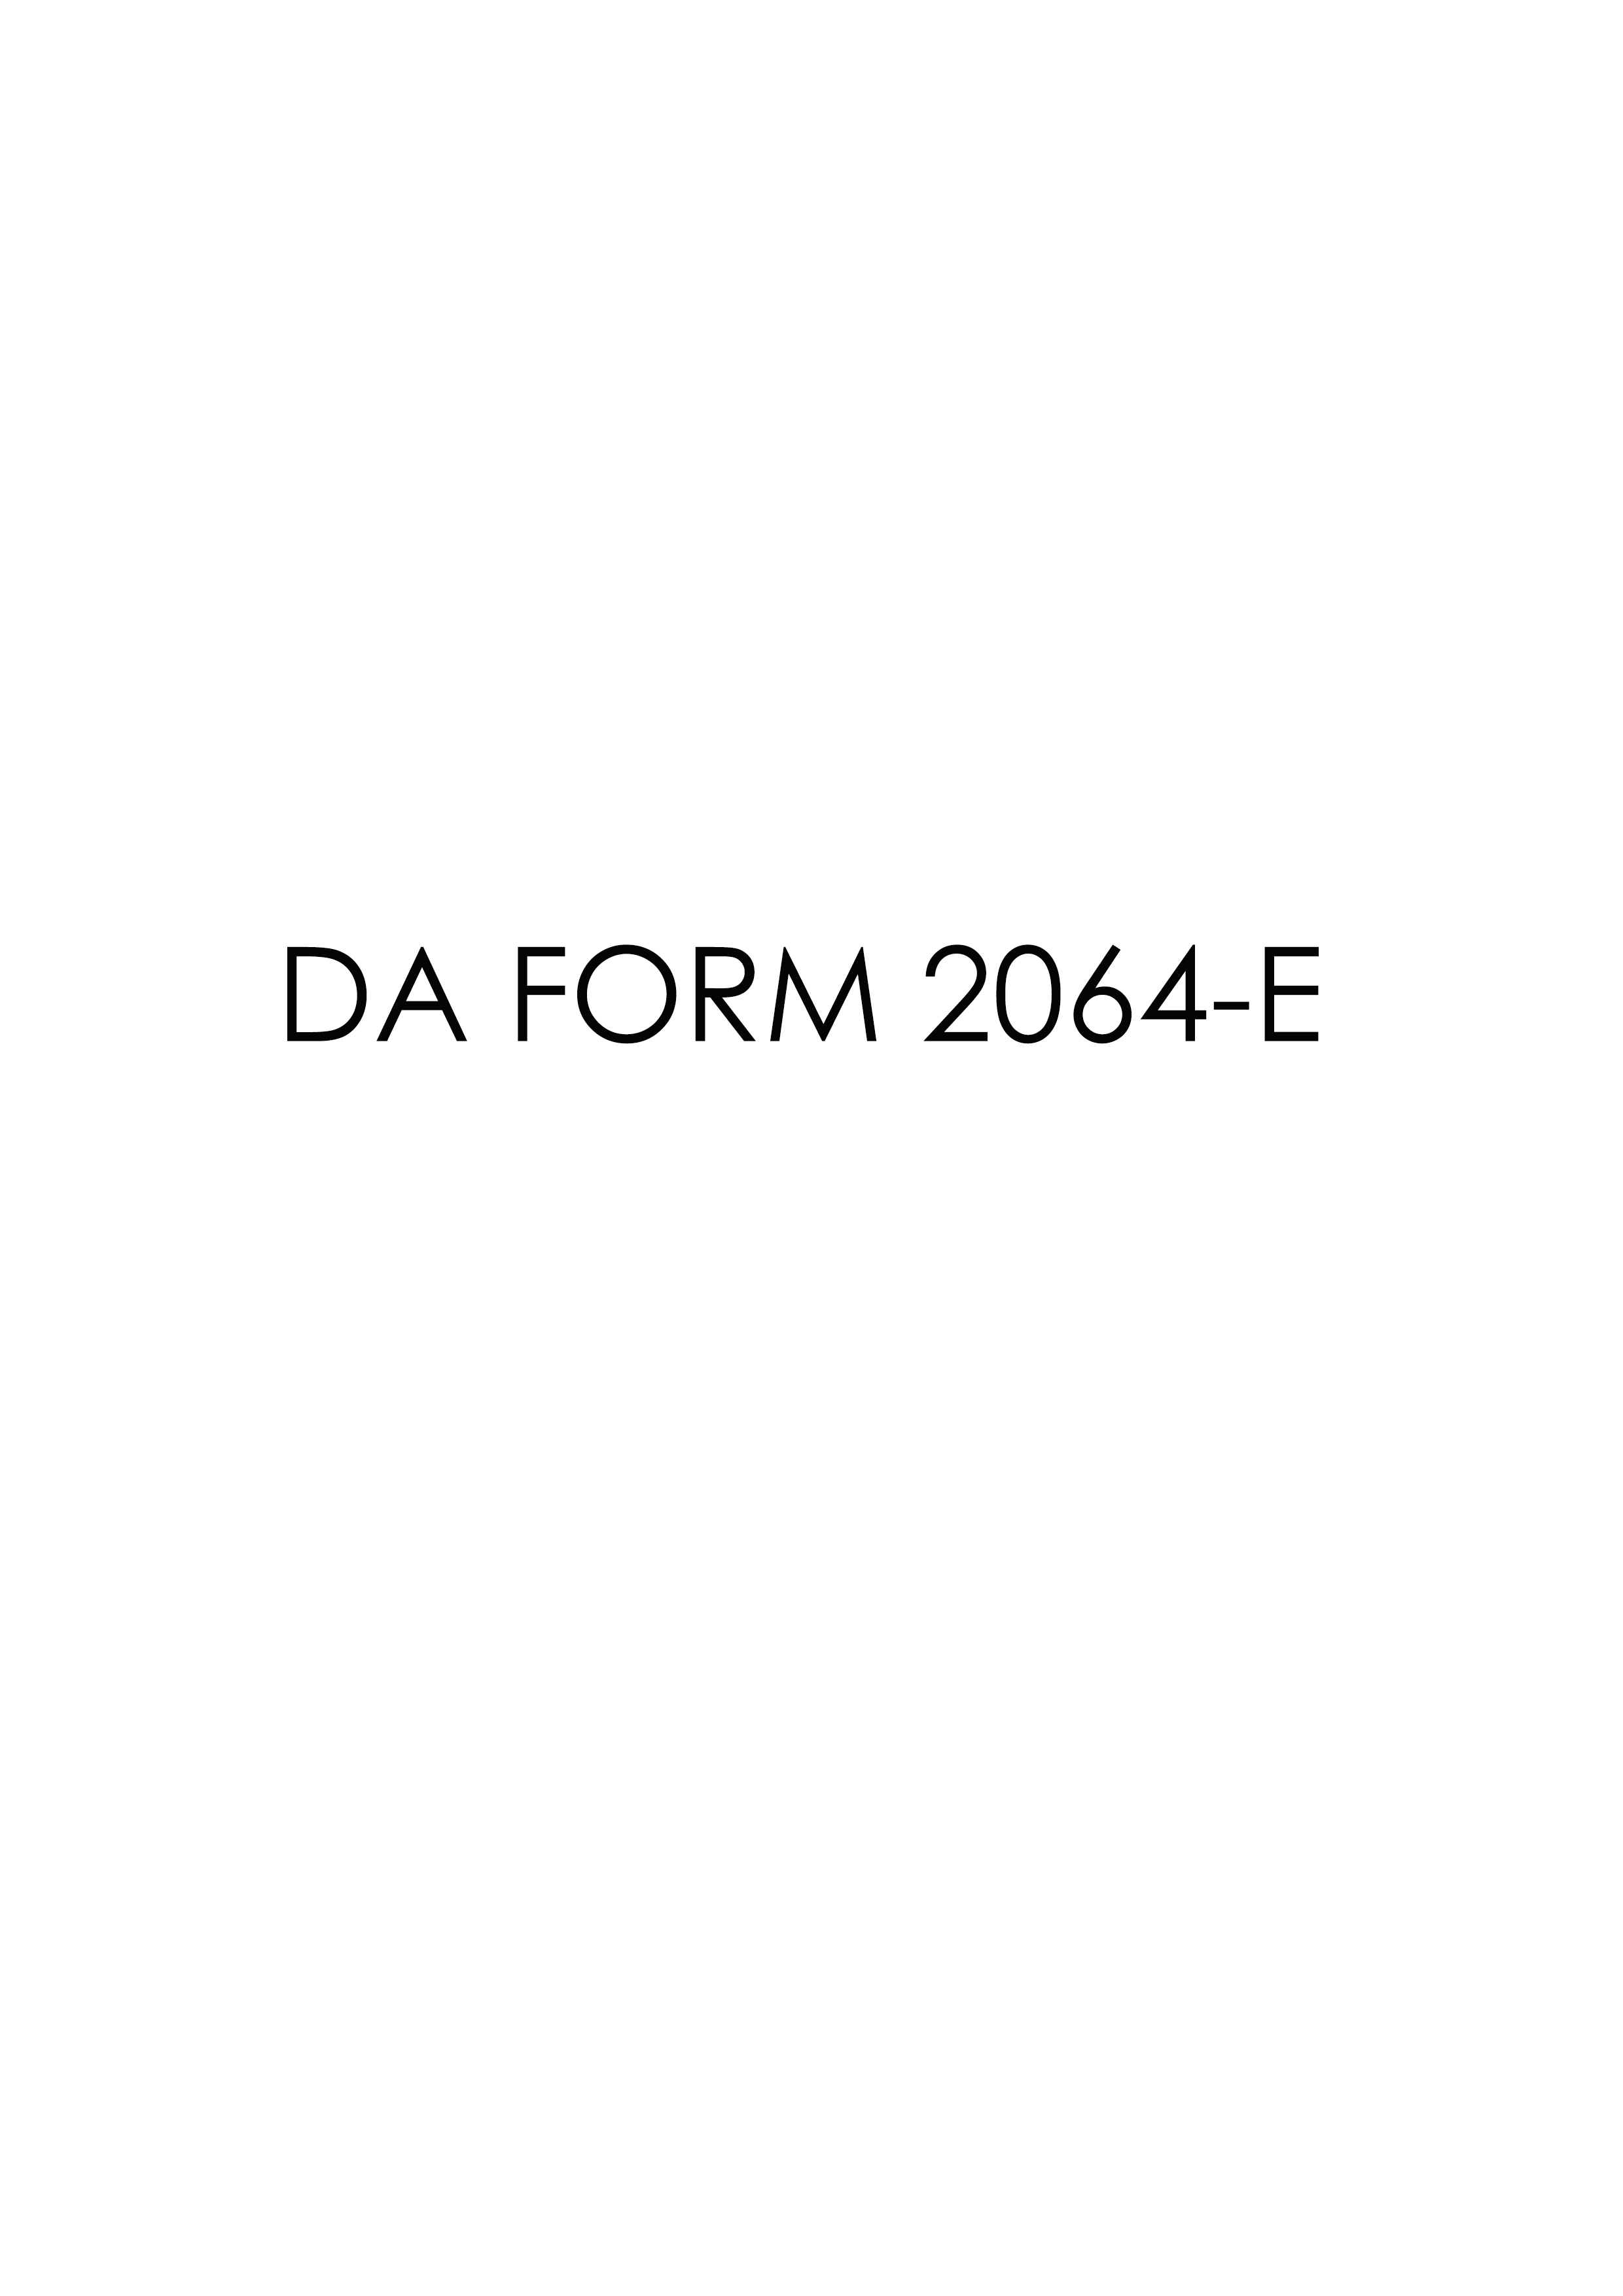 Download da 2064-E Form